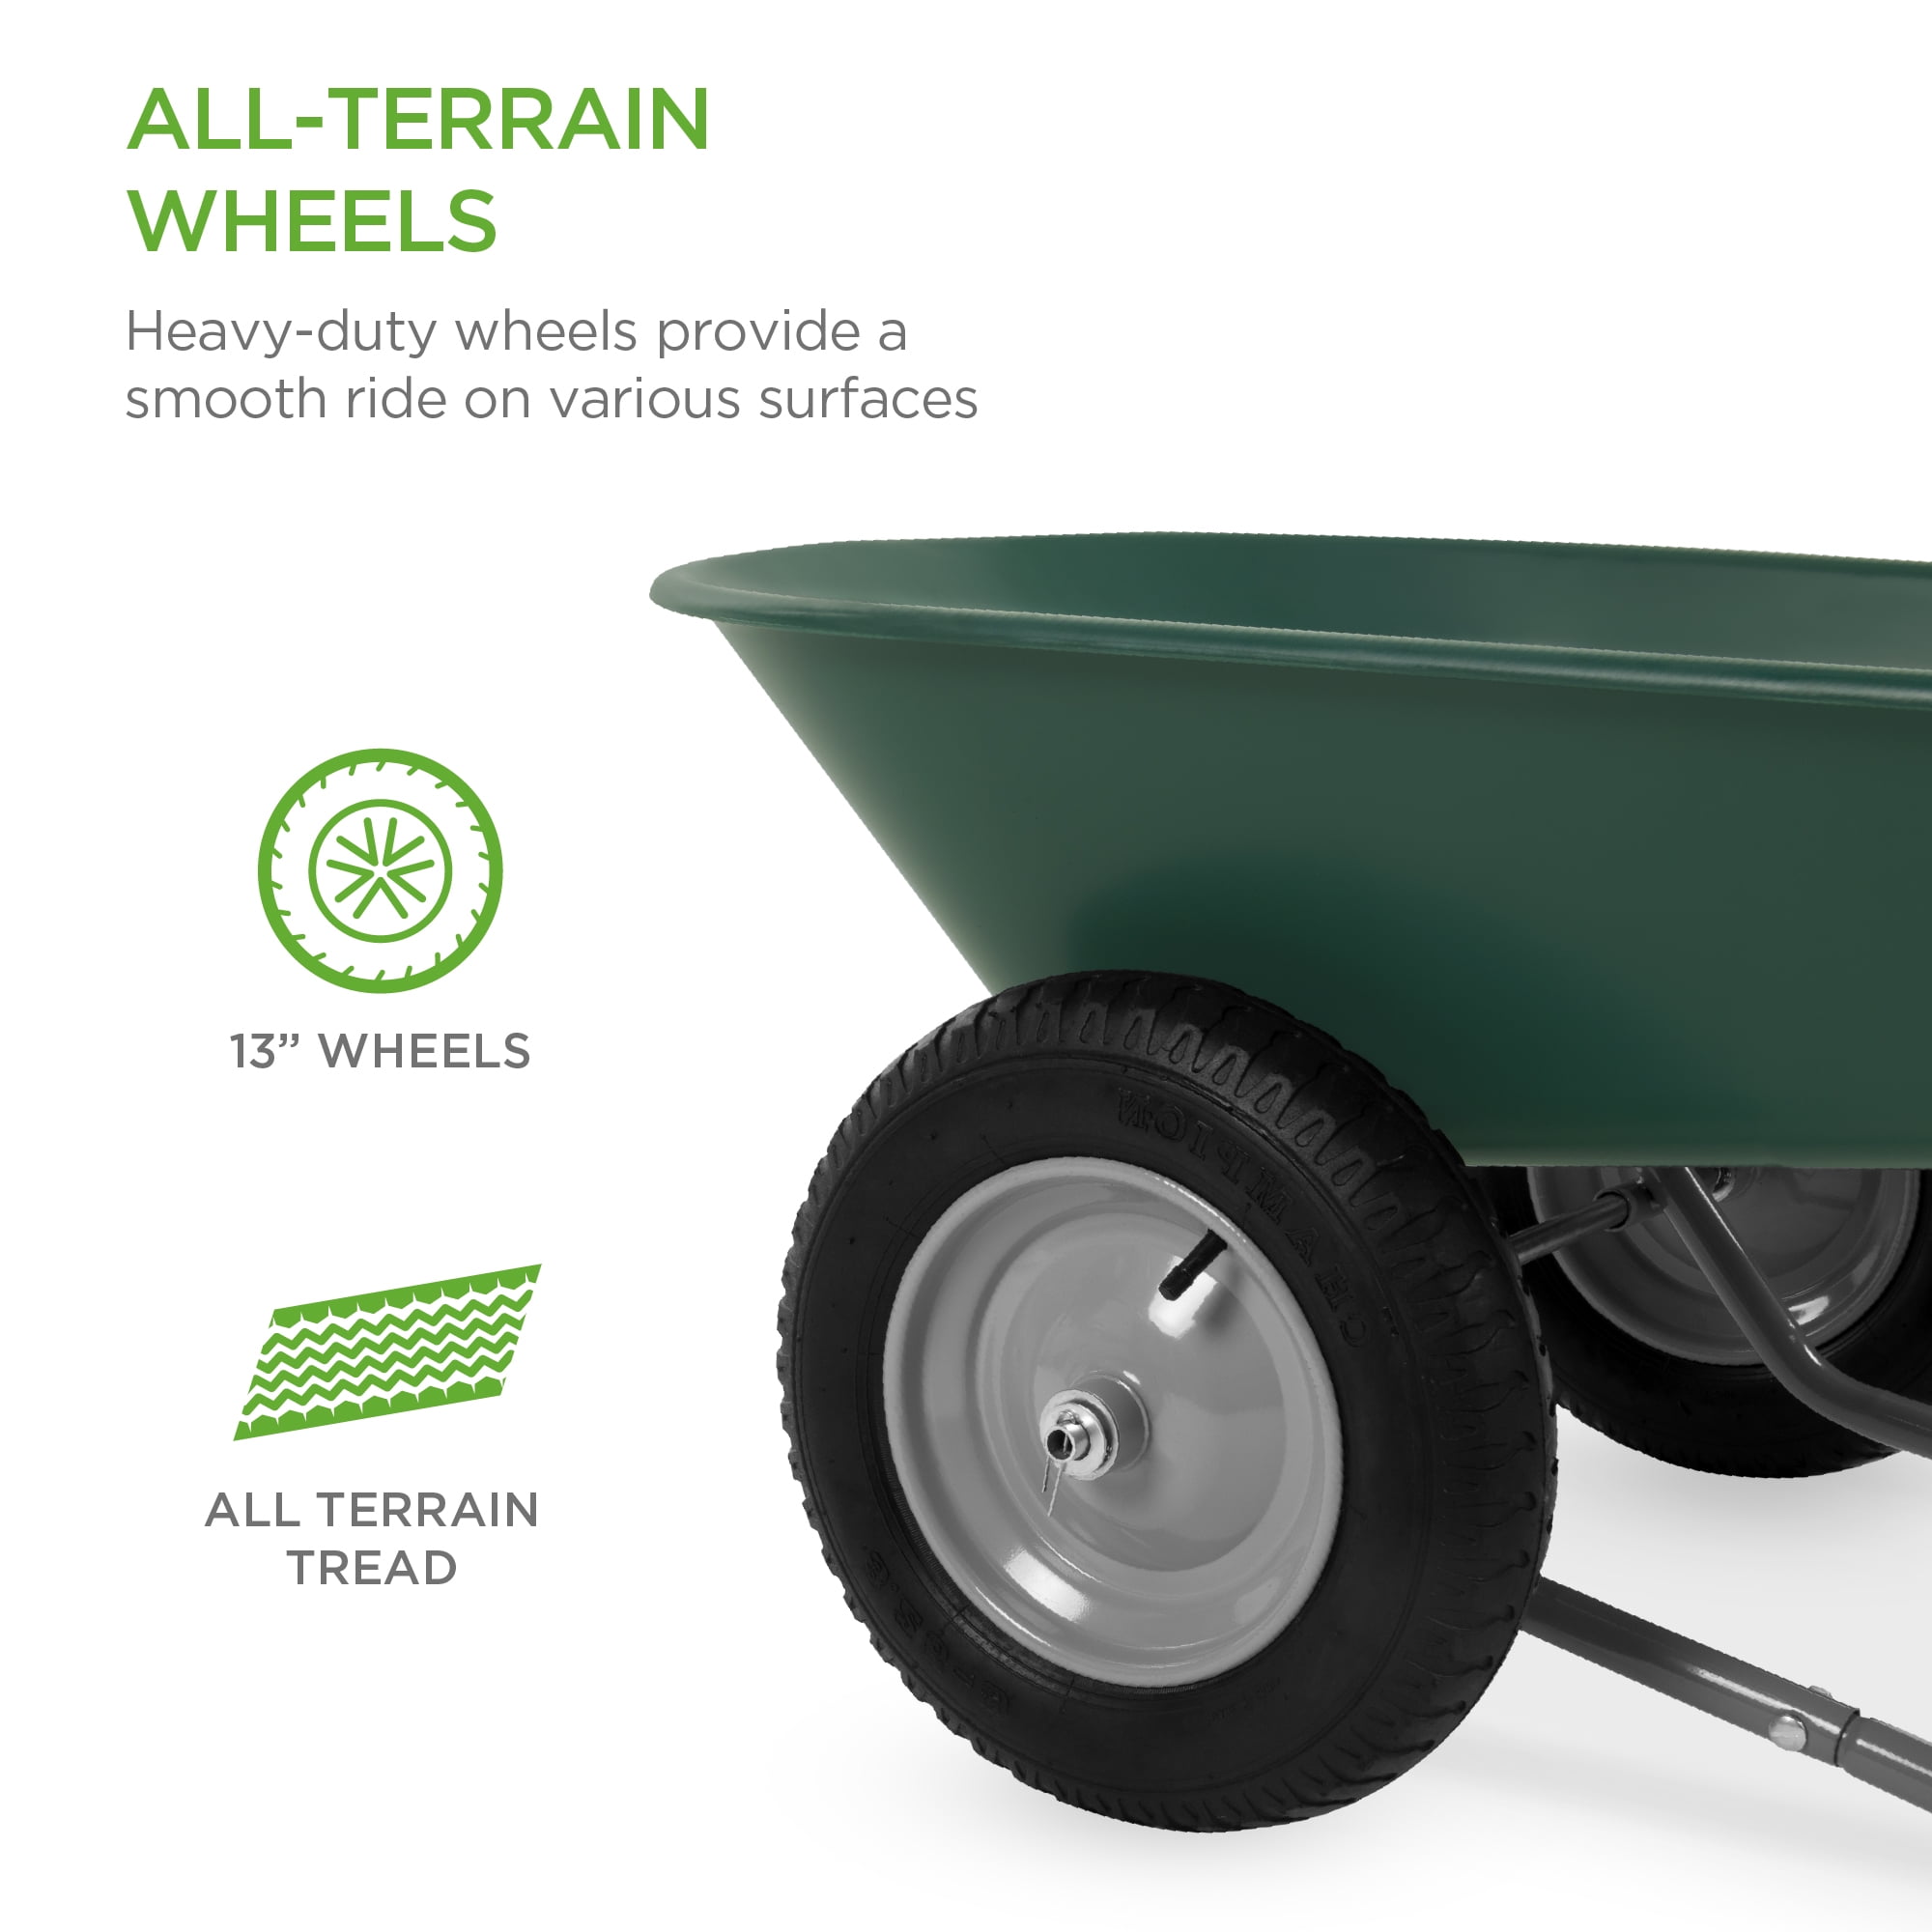 2-Wheeled Garden Wheelbarrow â€œ Large Capacity Rolling Utility Dump Cart for Residential DIY Lawn by Green Metal 